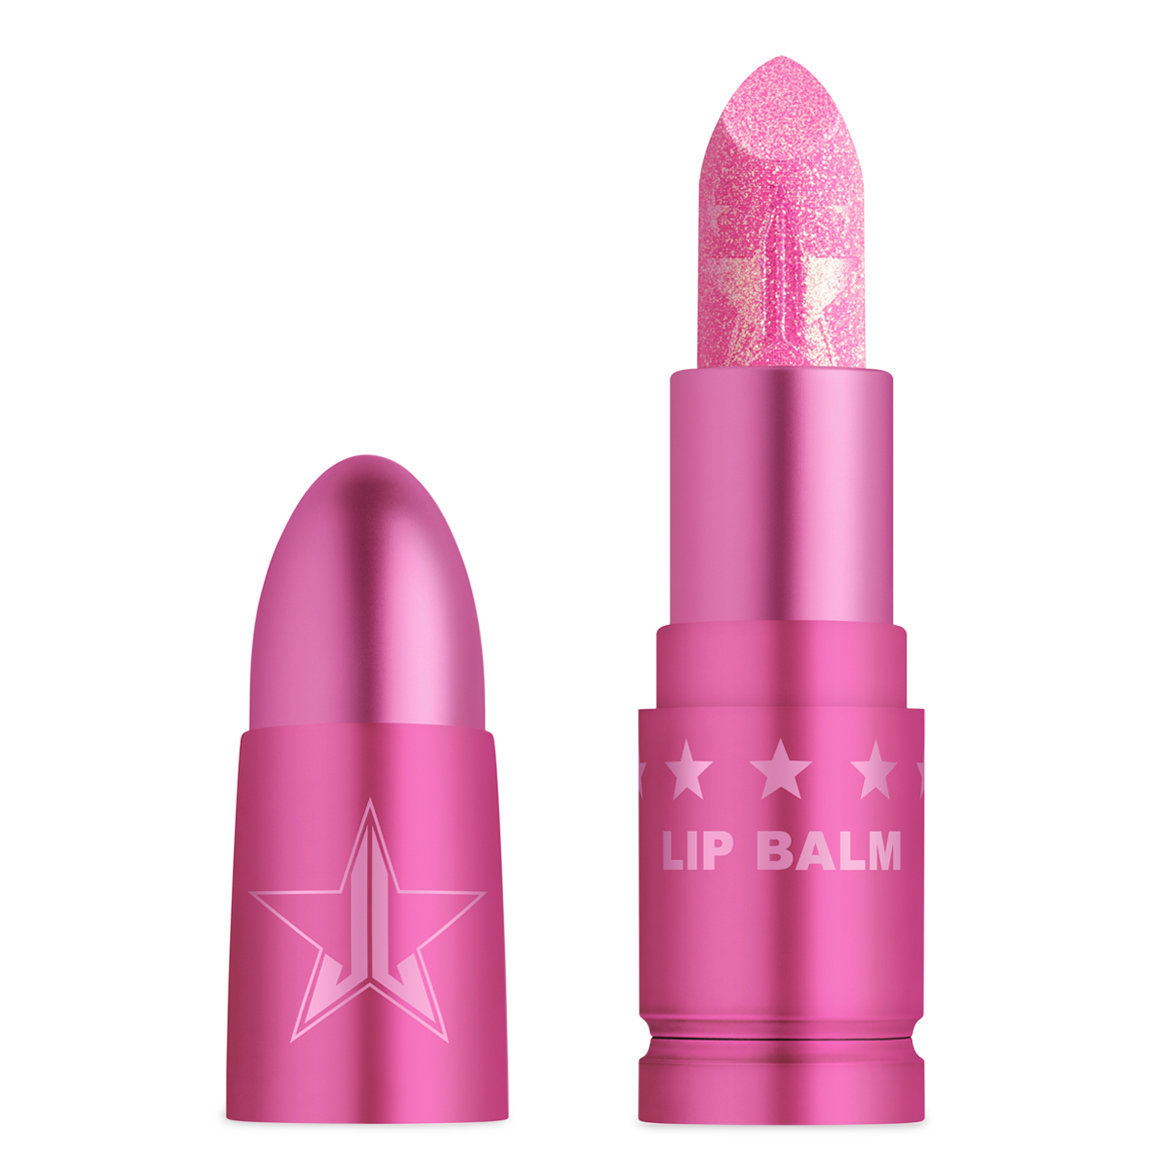 Jeffree Star Cosmetics Hydrating Glitz Lip Balm Pink Roses alternative view 1 - product swatch.